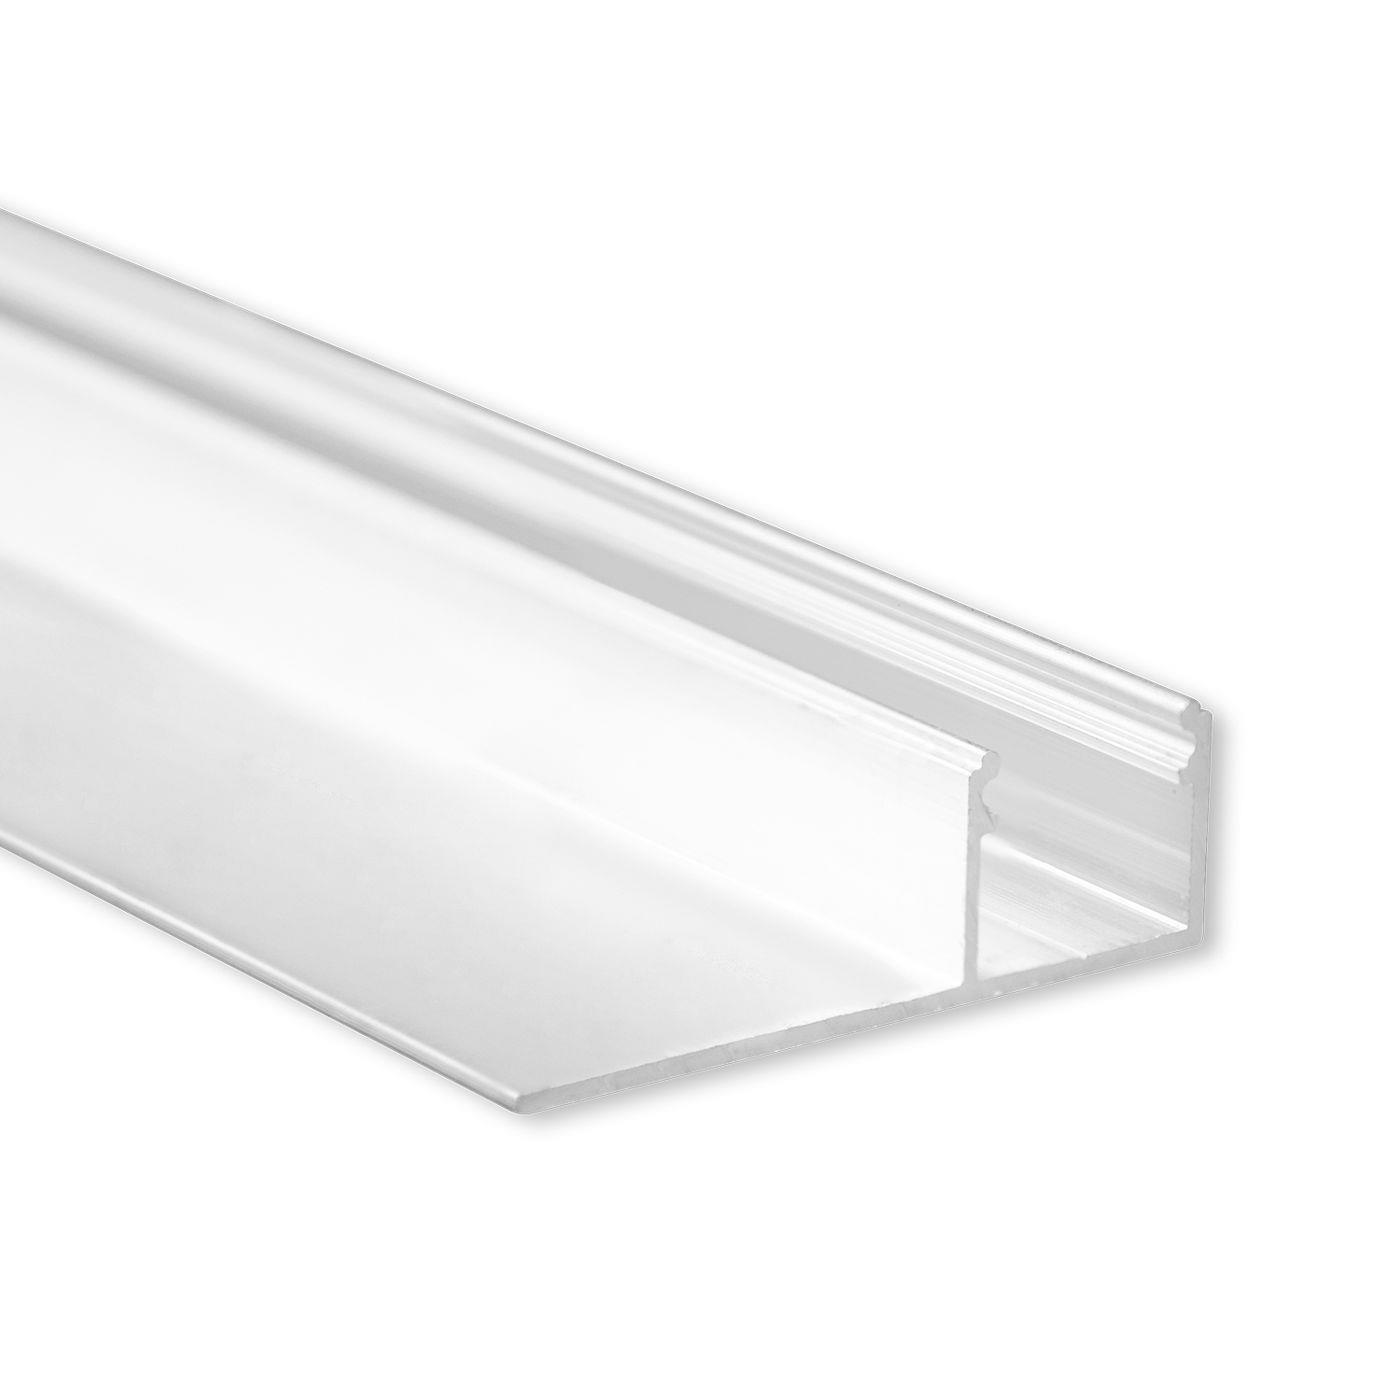 2m LED profile TBP4 Silver 47x14,5mm Aluminium Drywall profile for 14mm LED strips